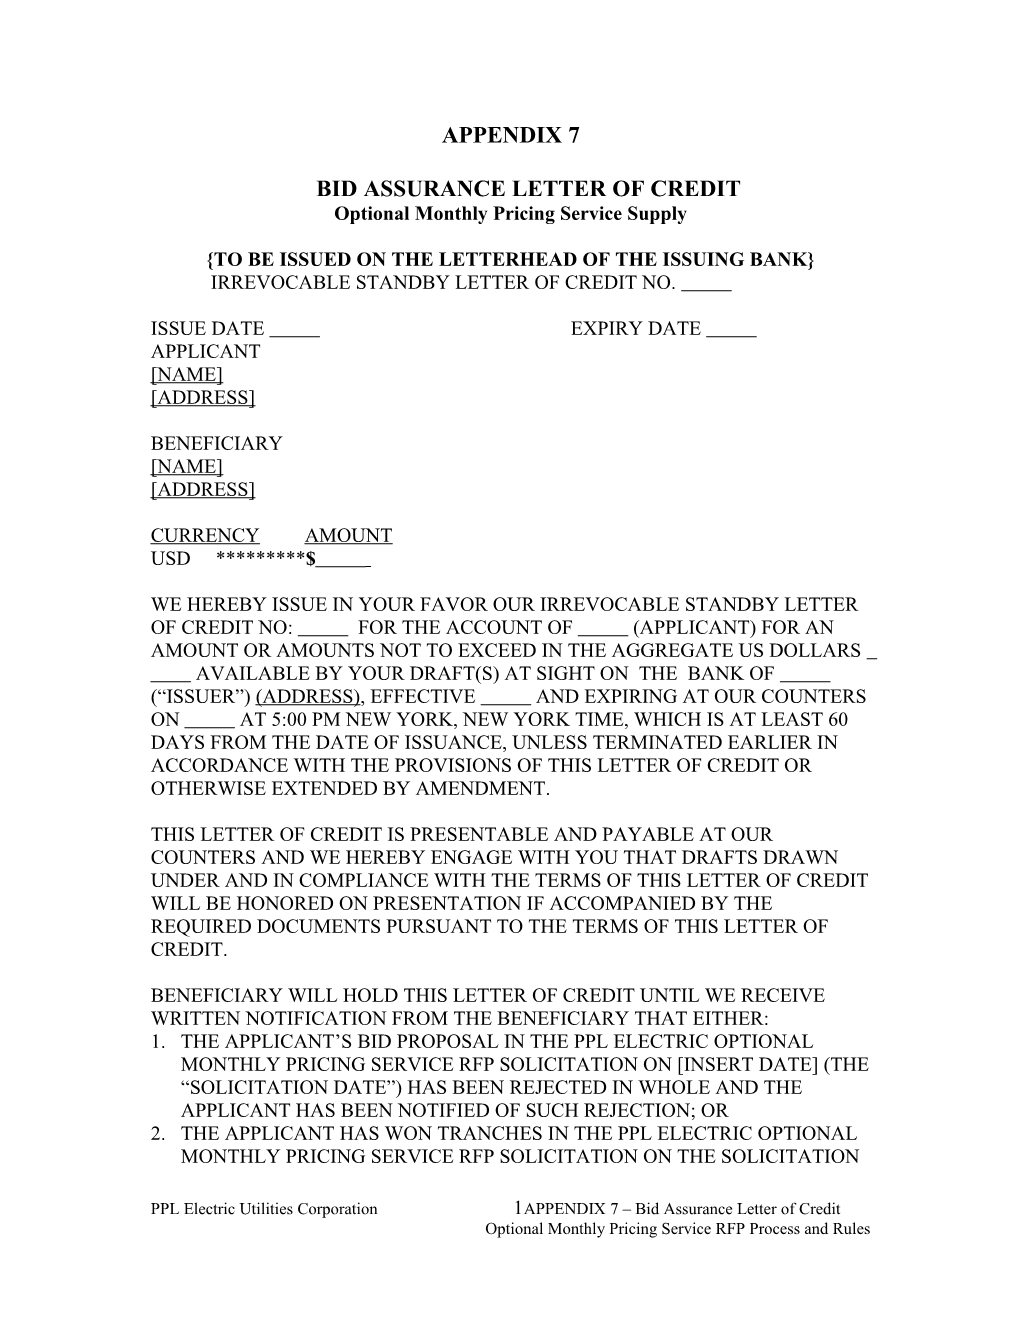 Appendix 7Bid Assurance Letter of Credit